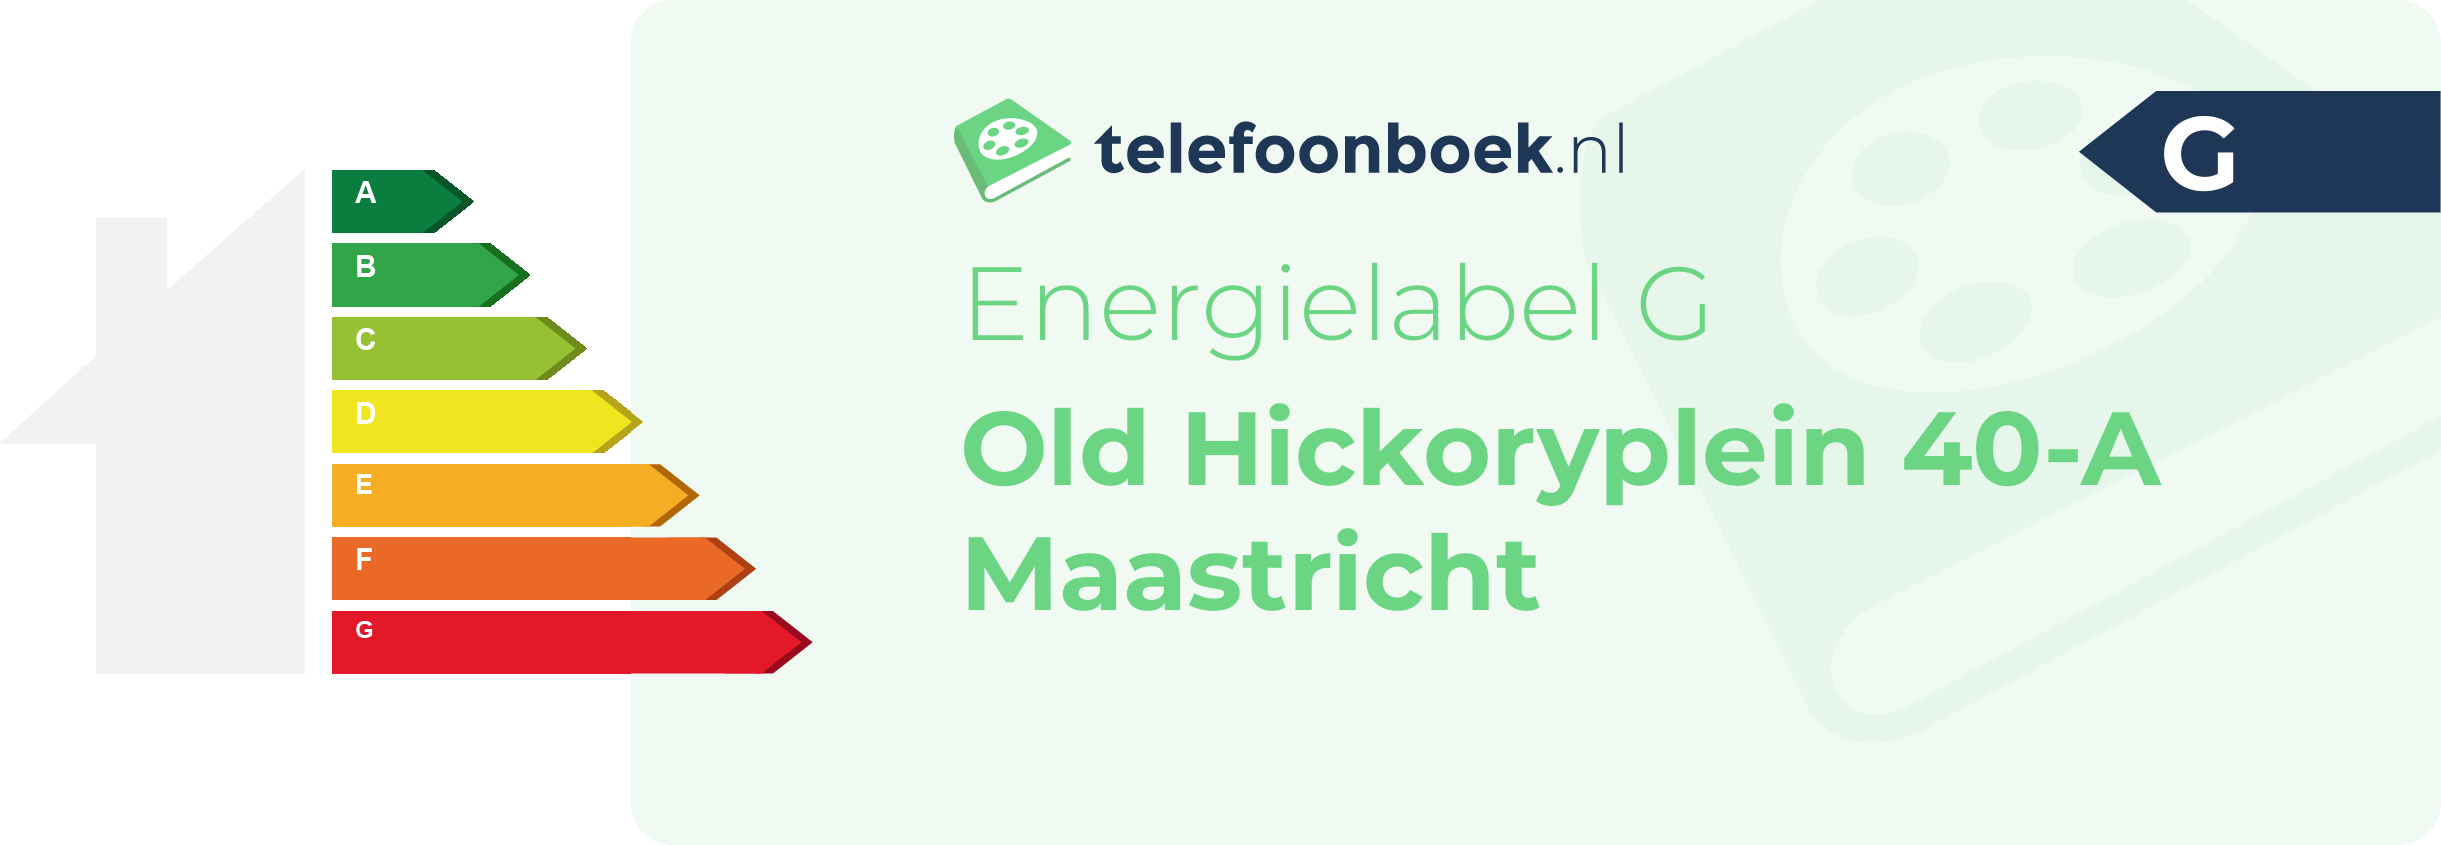 Energielabel Old Hickoryplein 40-A Maastricht